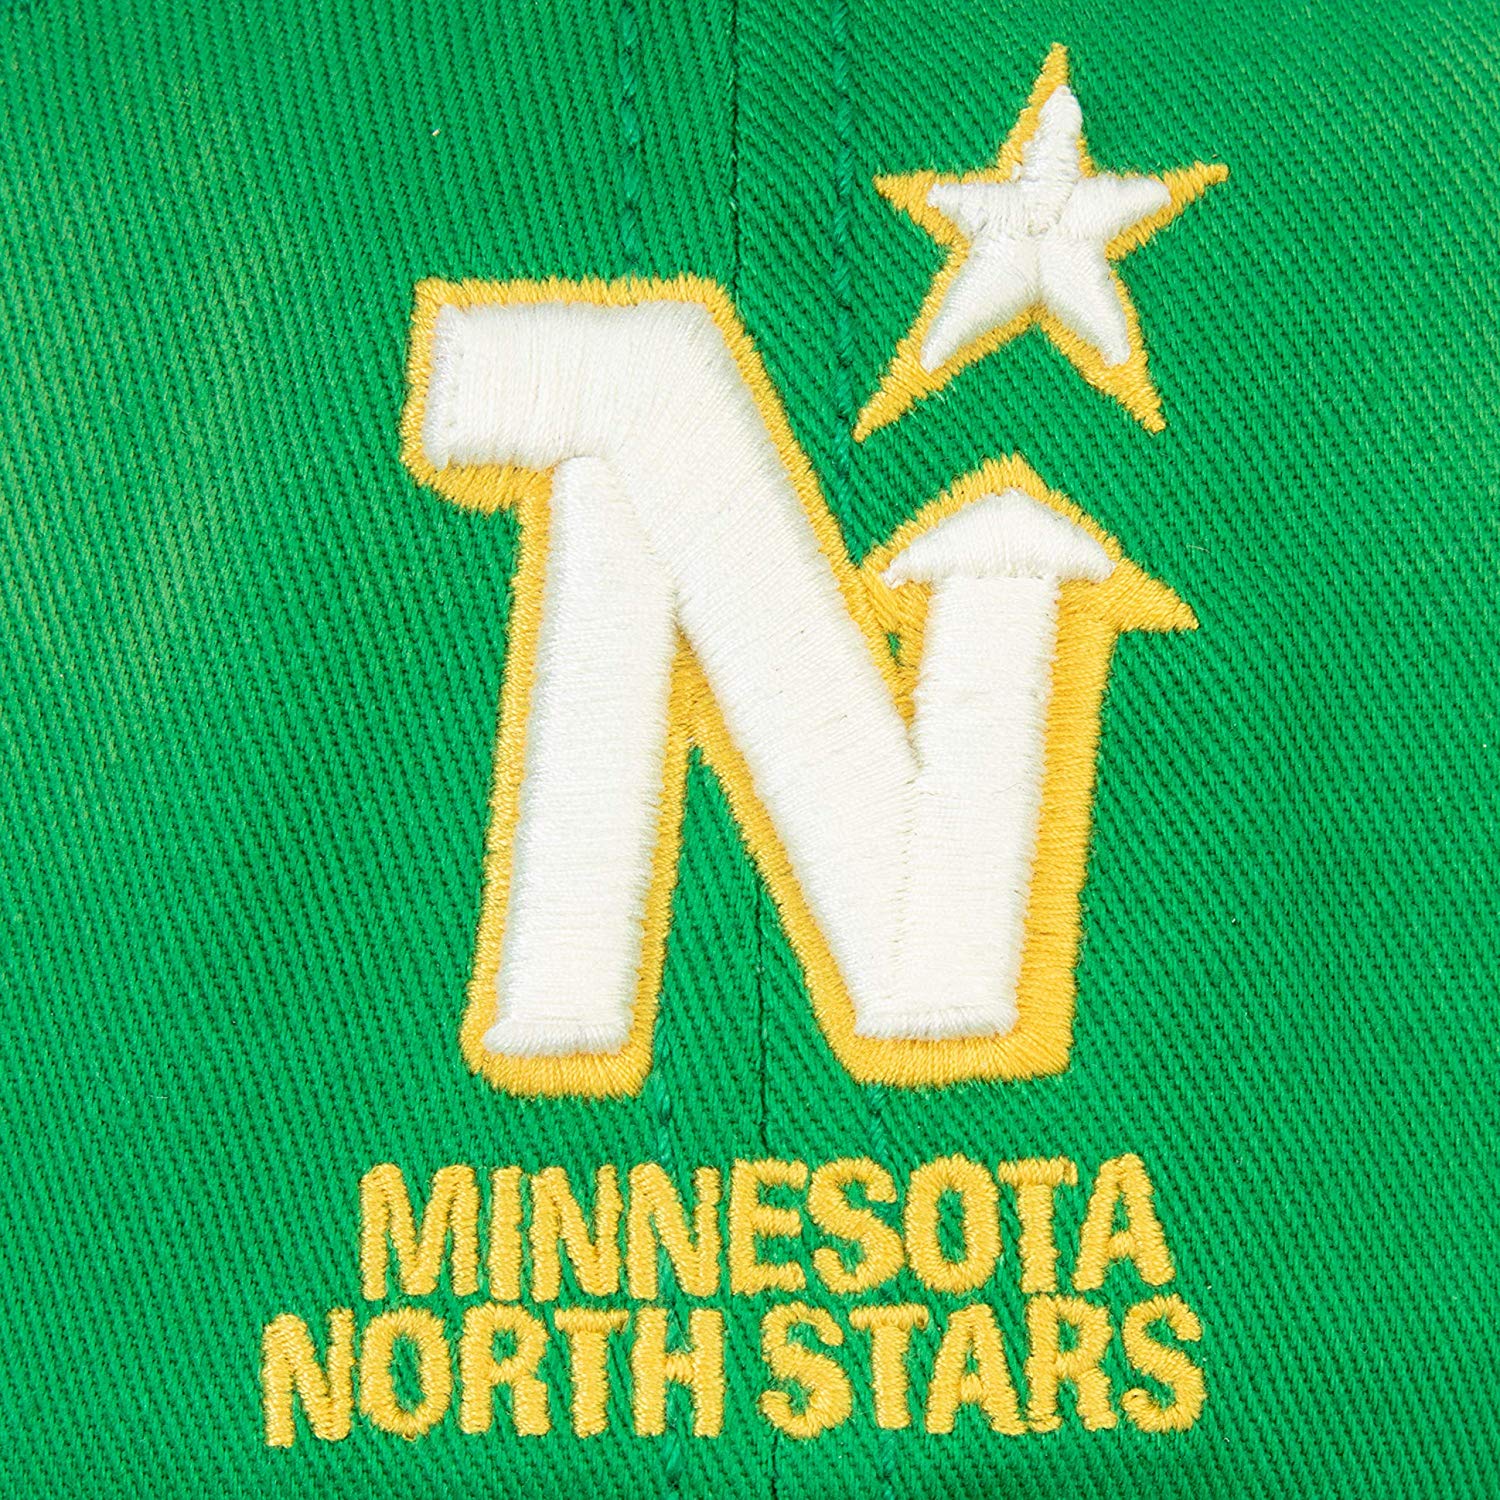 Men's Fanatics Branded Green Minnesota North Stars Premier